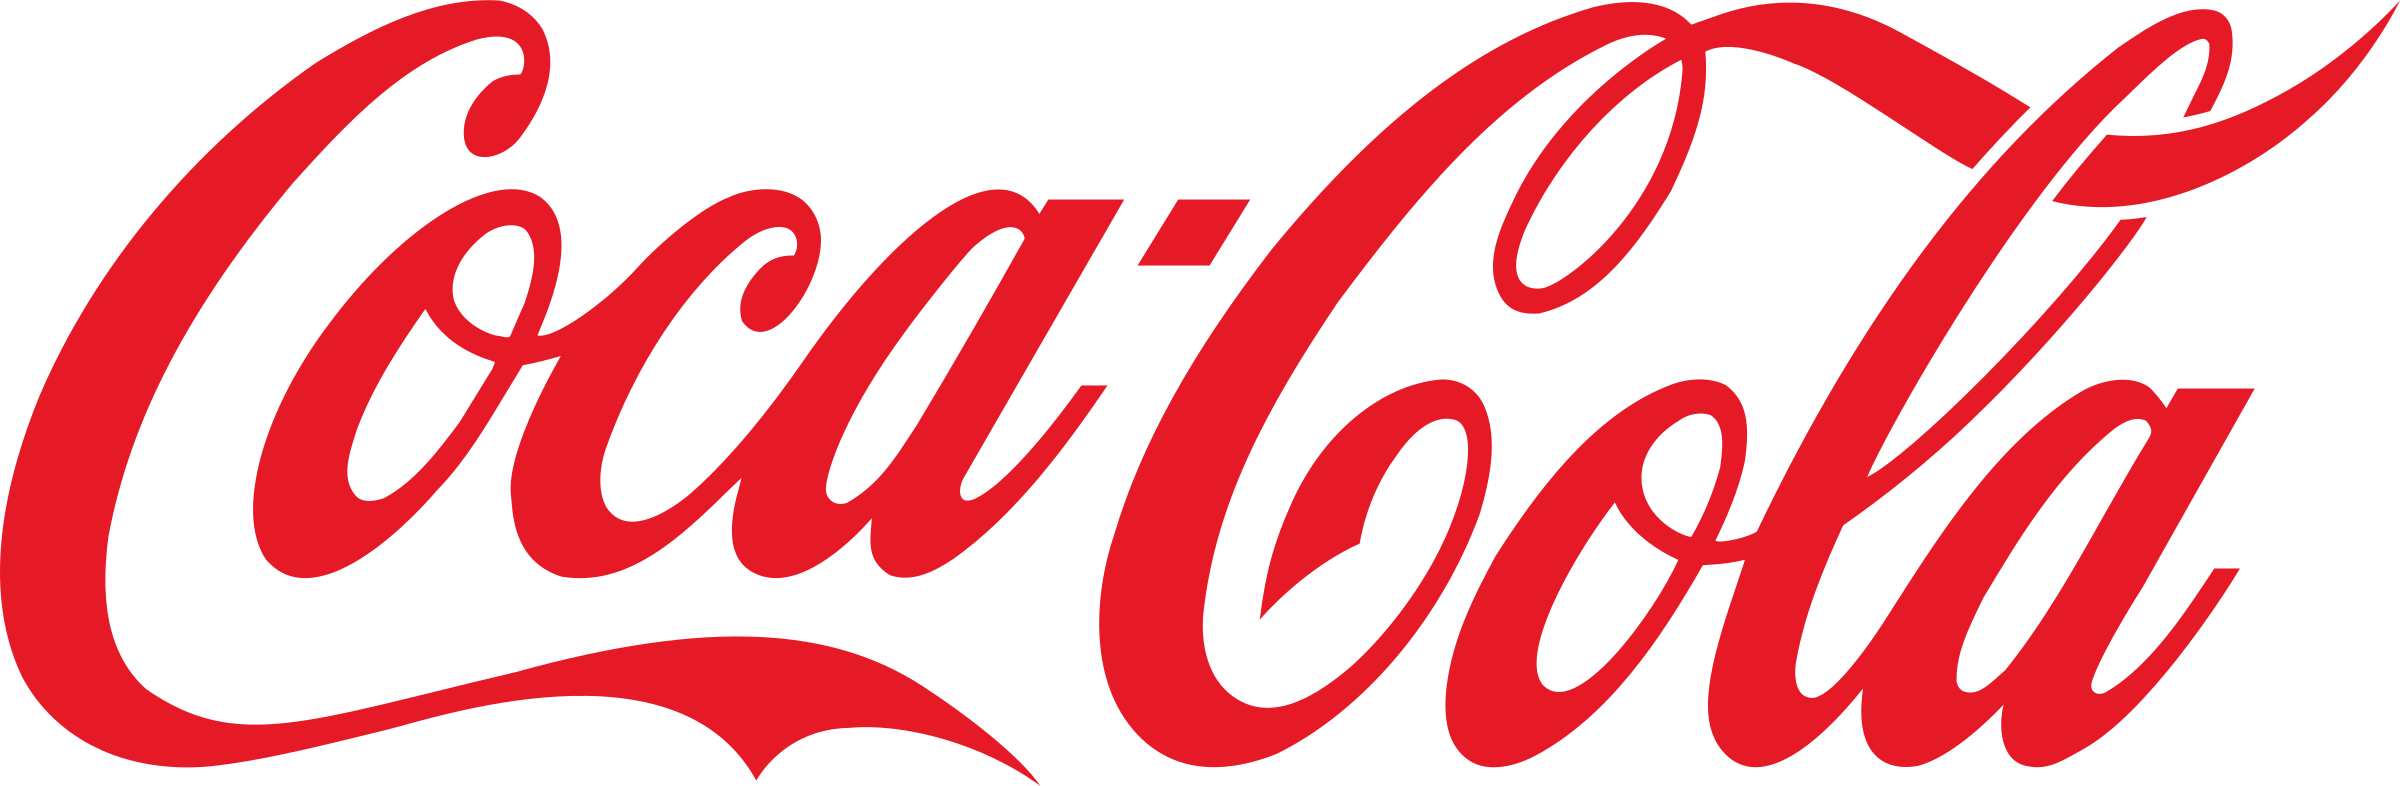 Birmingham Coca-Cola Bottling Co.